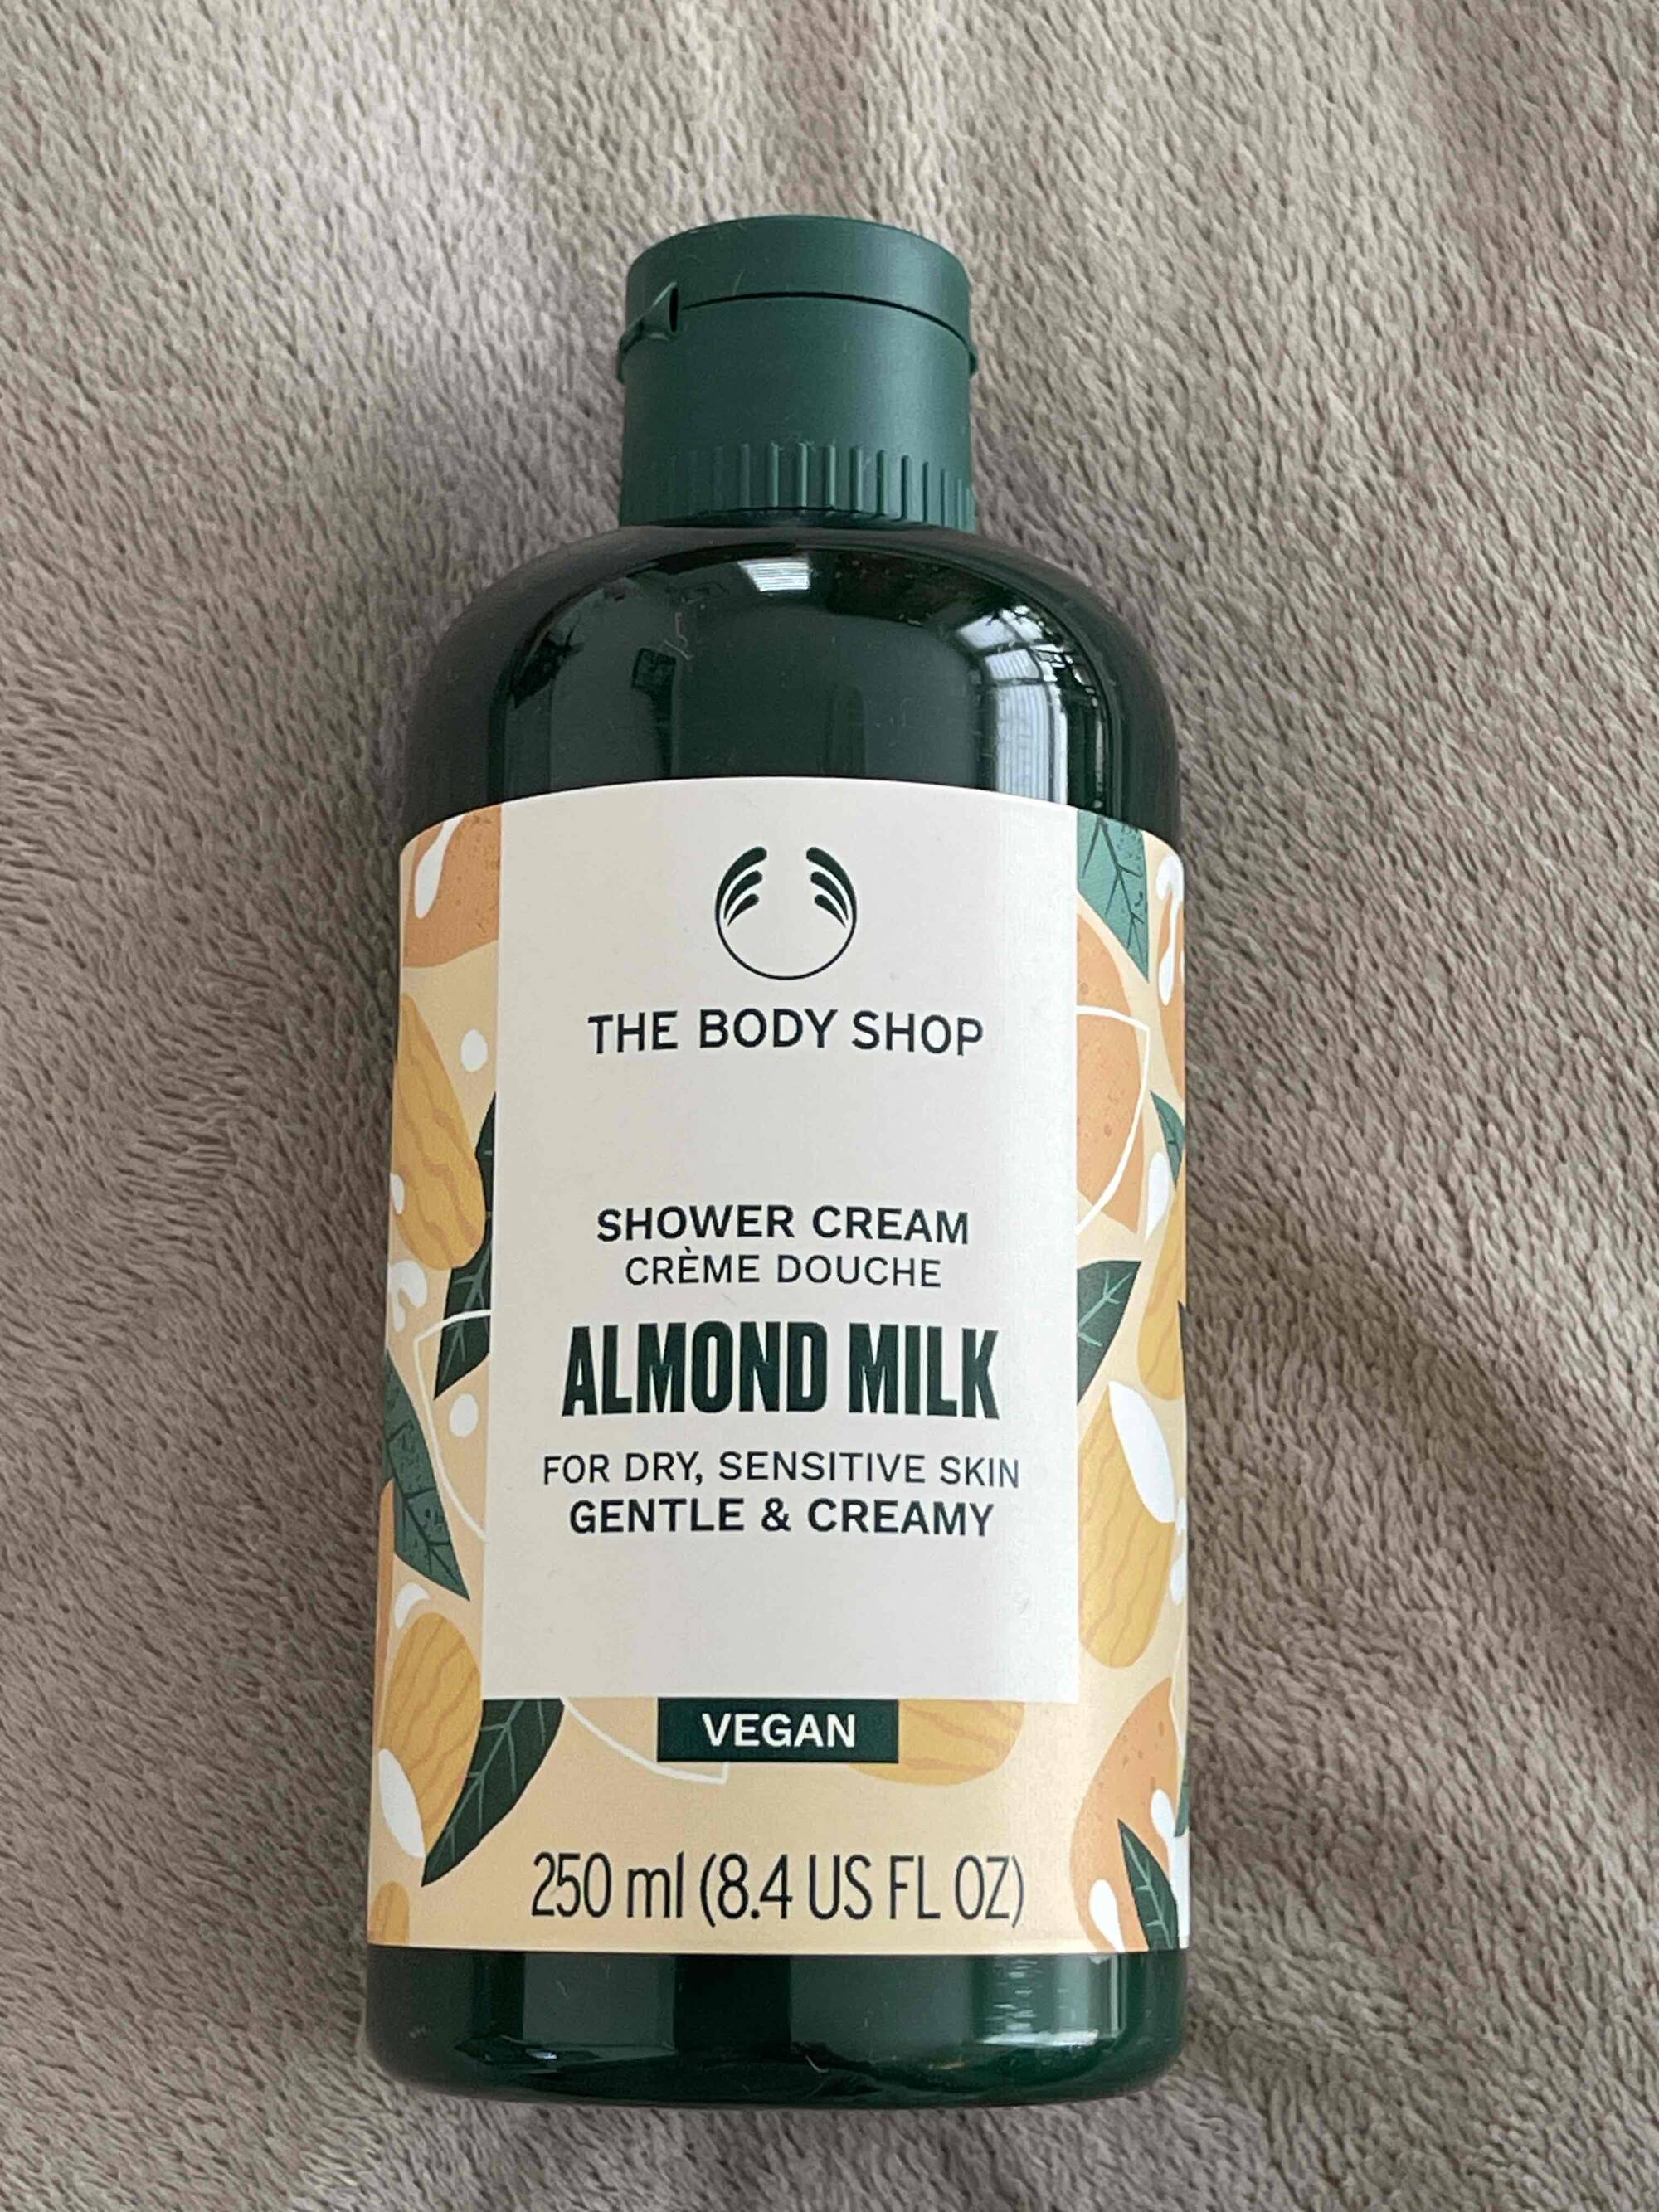 THE BODY SHOP - Almond milk - Crème douche